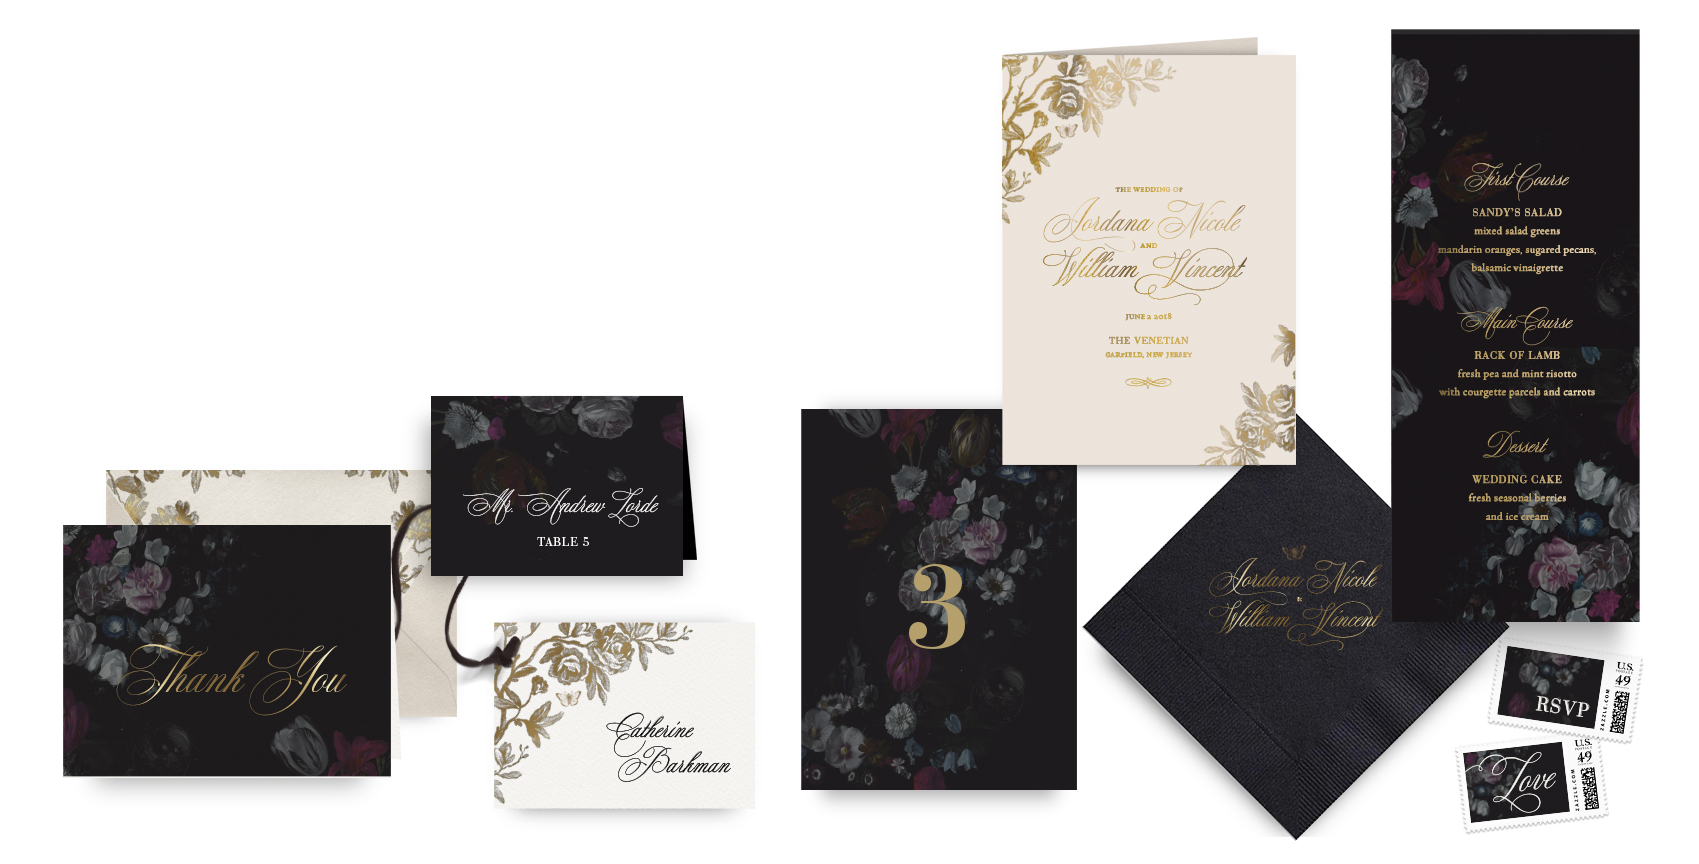 Moody flower menus, programs and wedding accessories